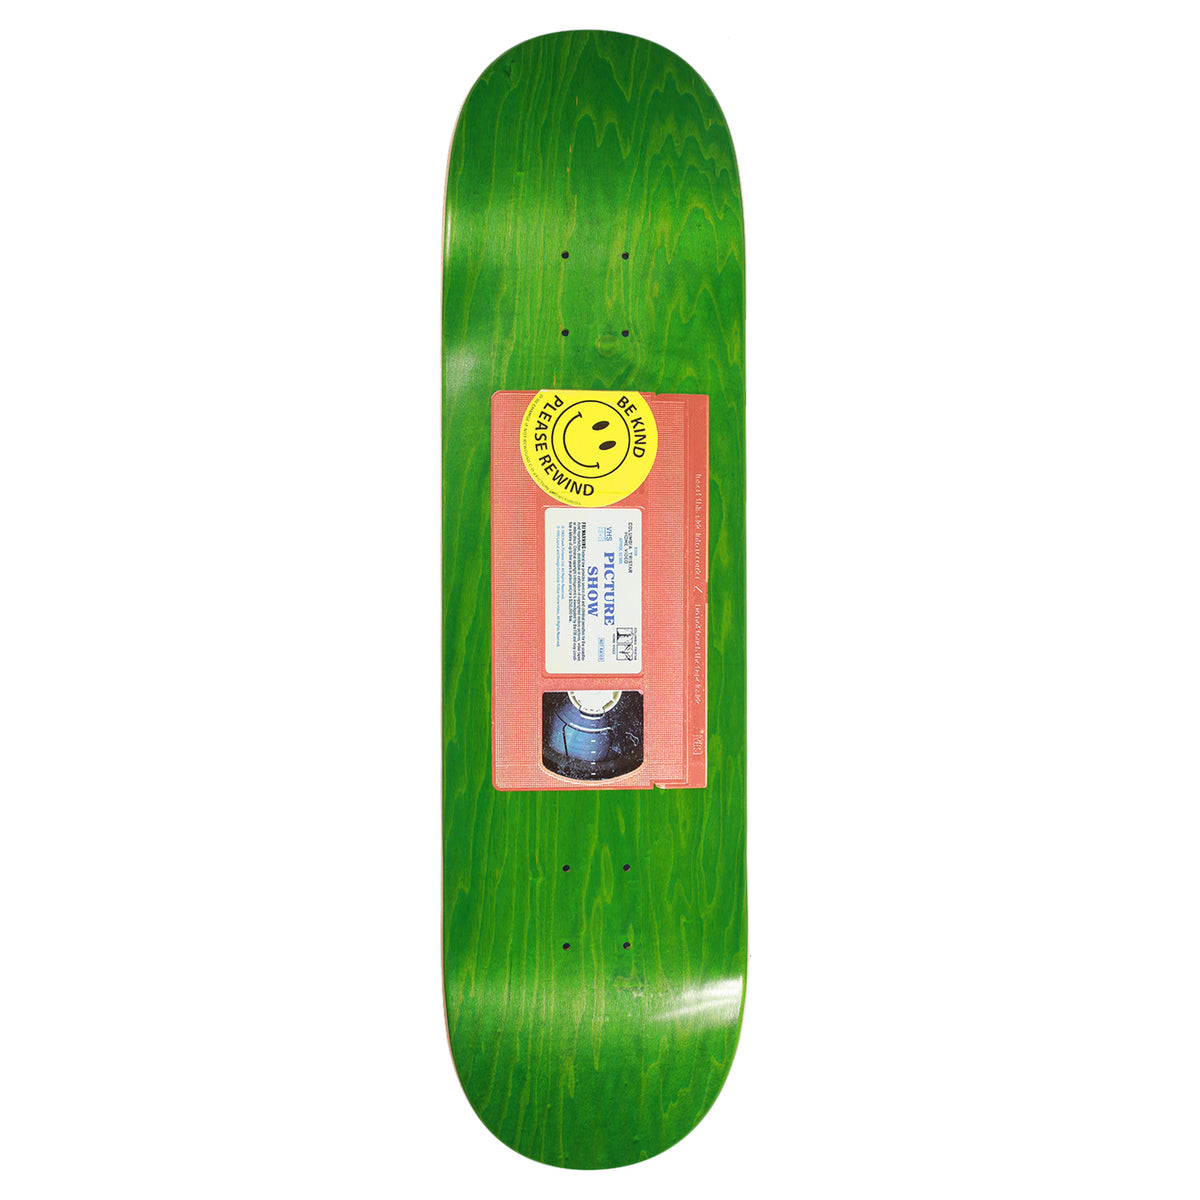 Picture Show Cassette Skateboard Deck Woodgrain